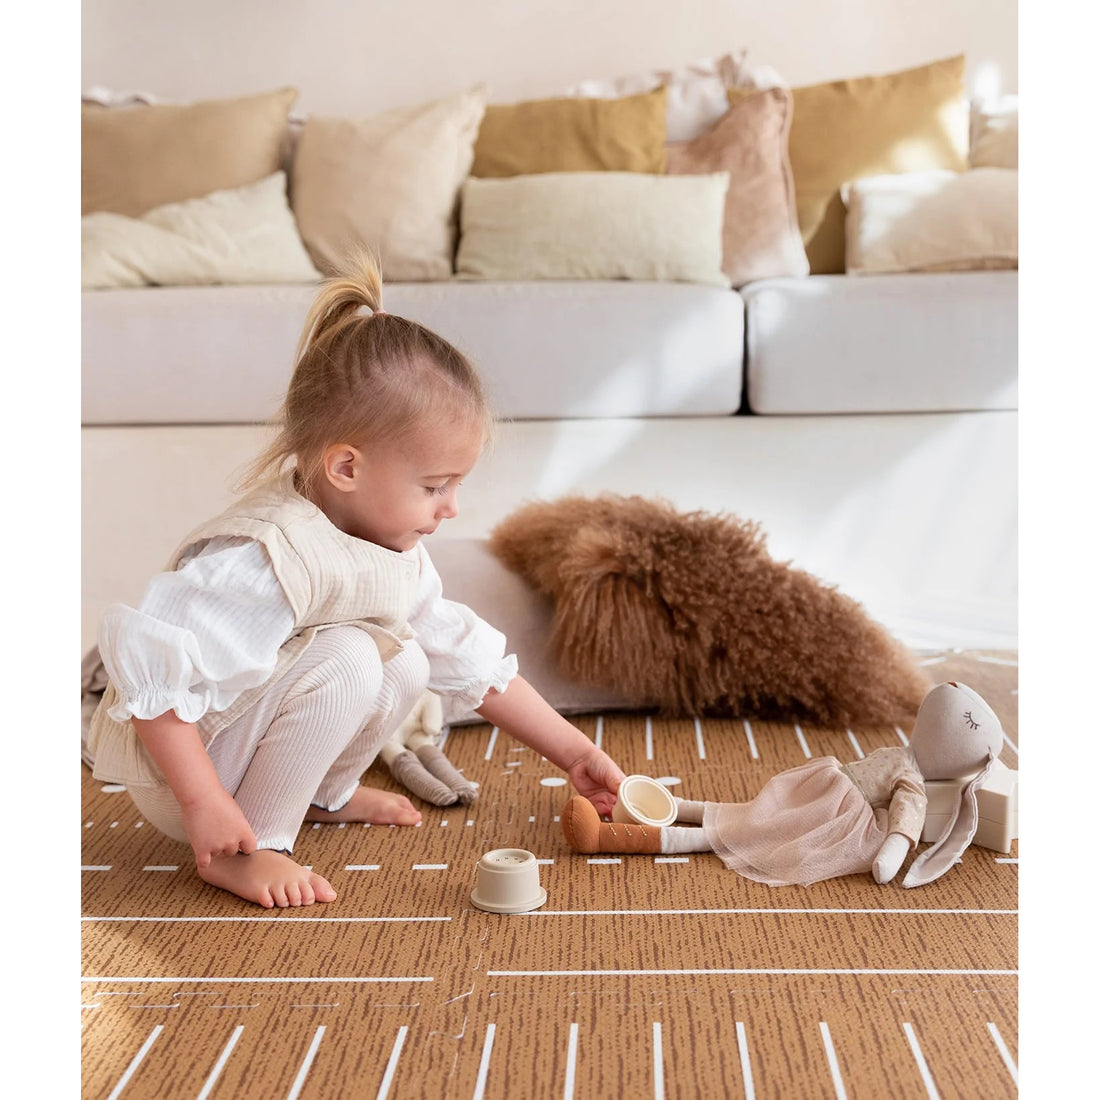 toddlekind-prettier-playmat-berber-camel-120x180cm-6-tiles-&-12-edging-borders-todk-338693- (8)